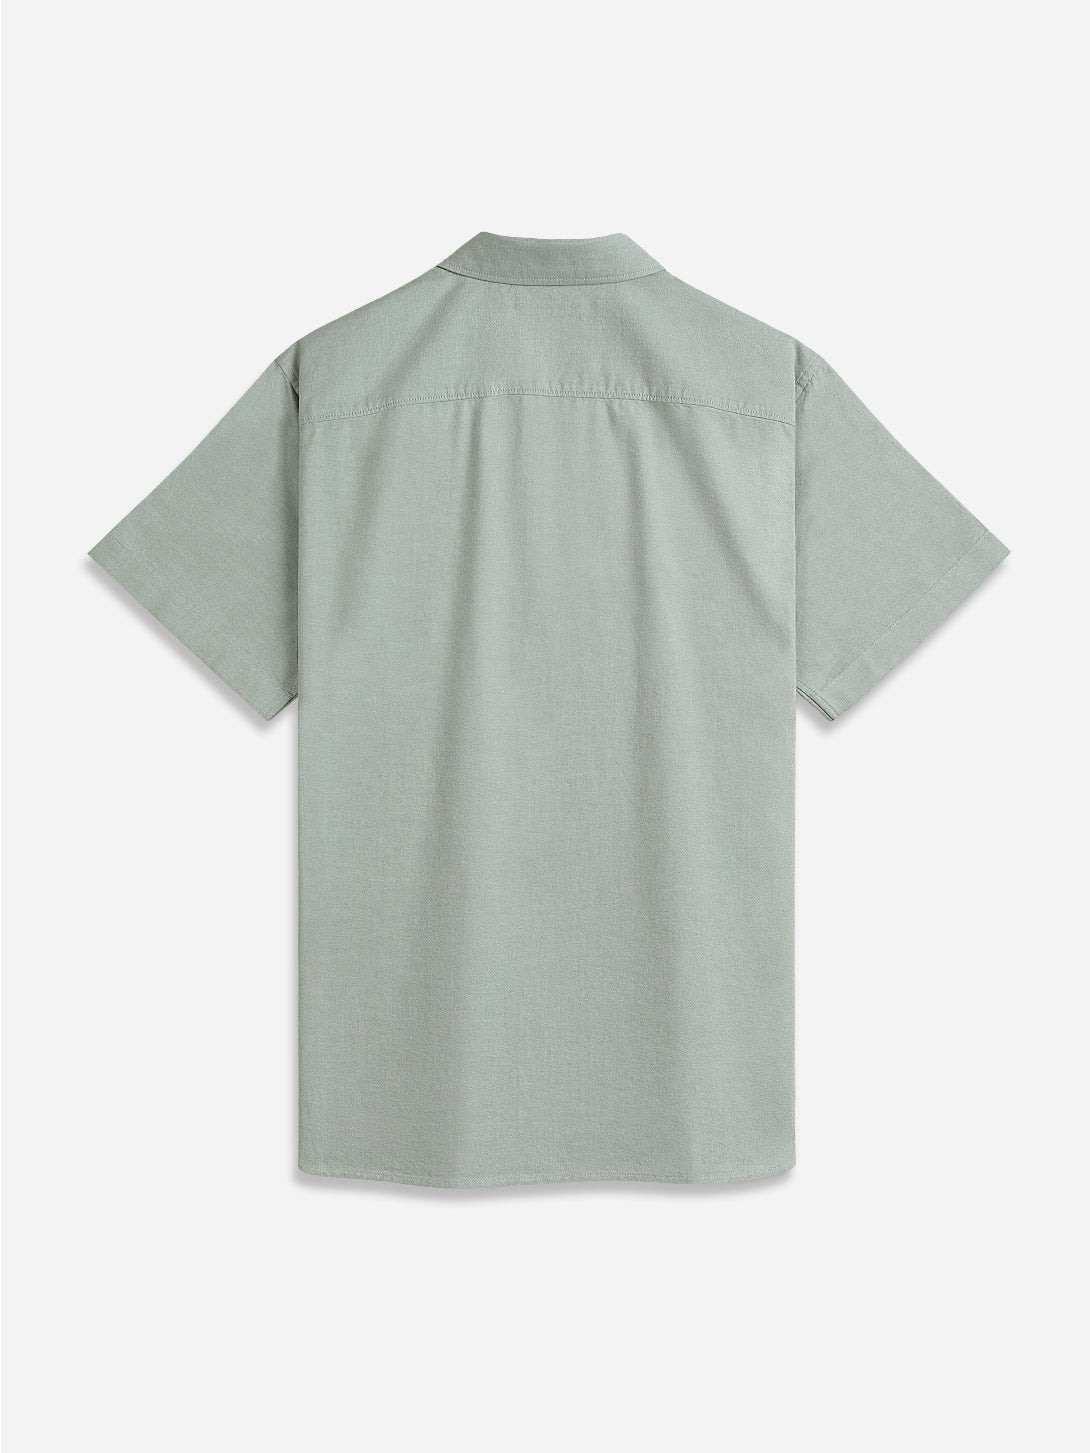 Seagrass Fulton Oxford Shirt Mens Button Down Short Sleeve